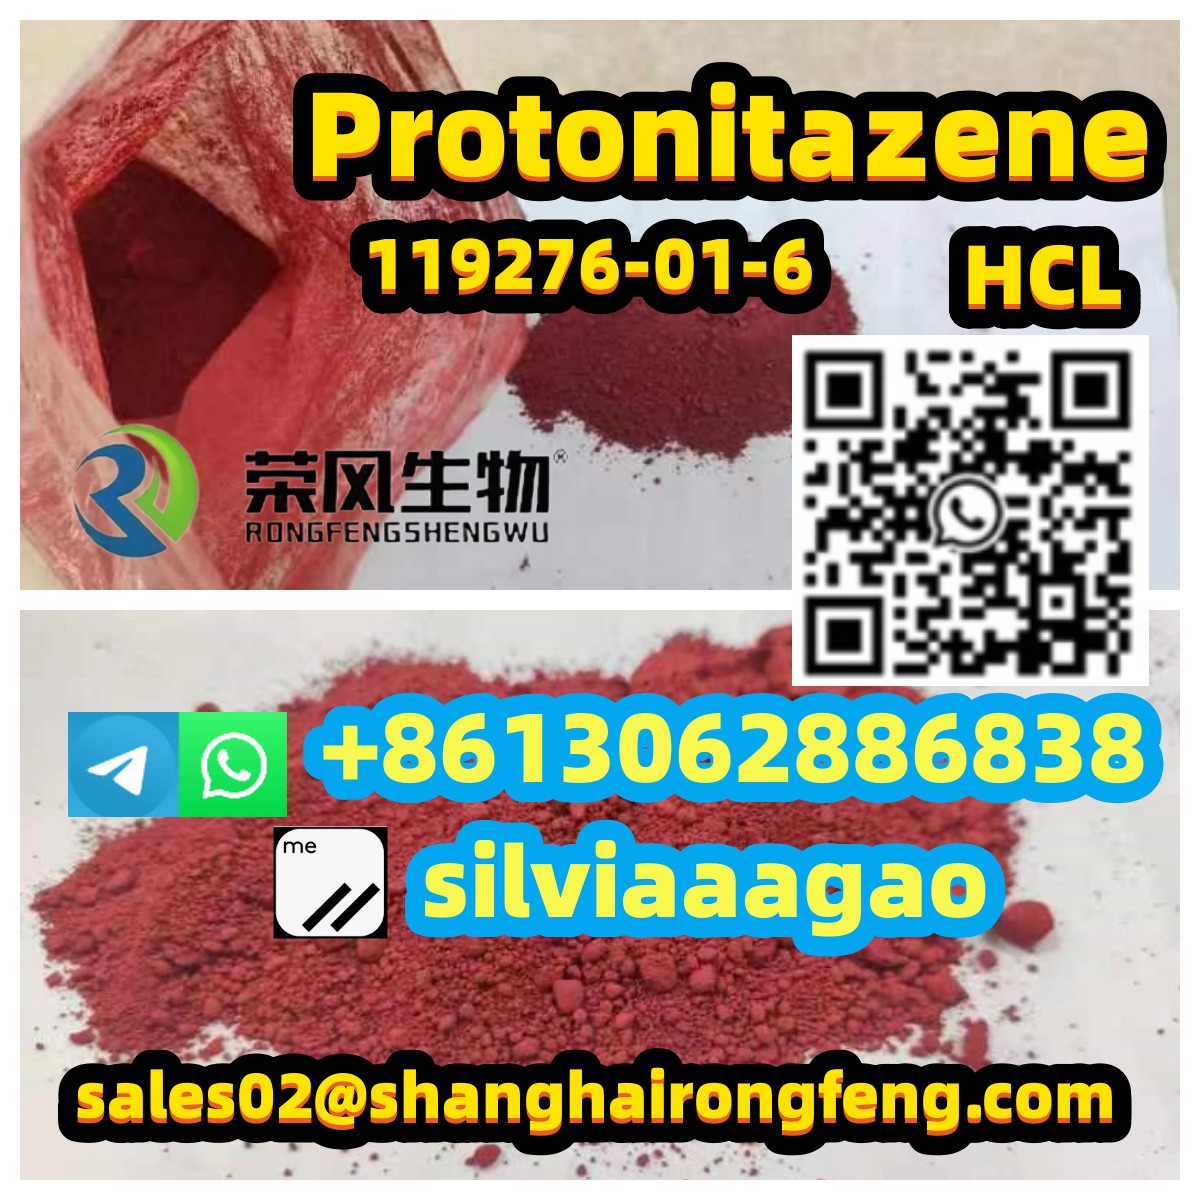 Protonitazene (hydrochloride)，CAS.119276-01-6, opioids รูปที่ 1